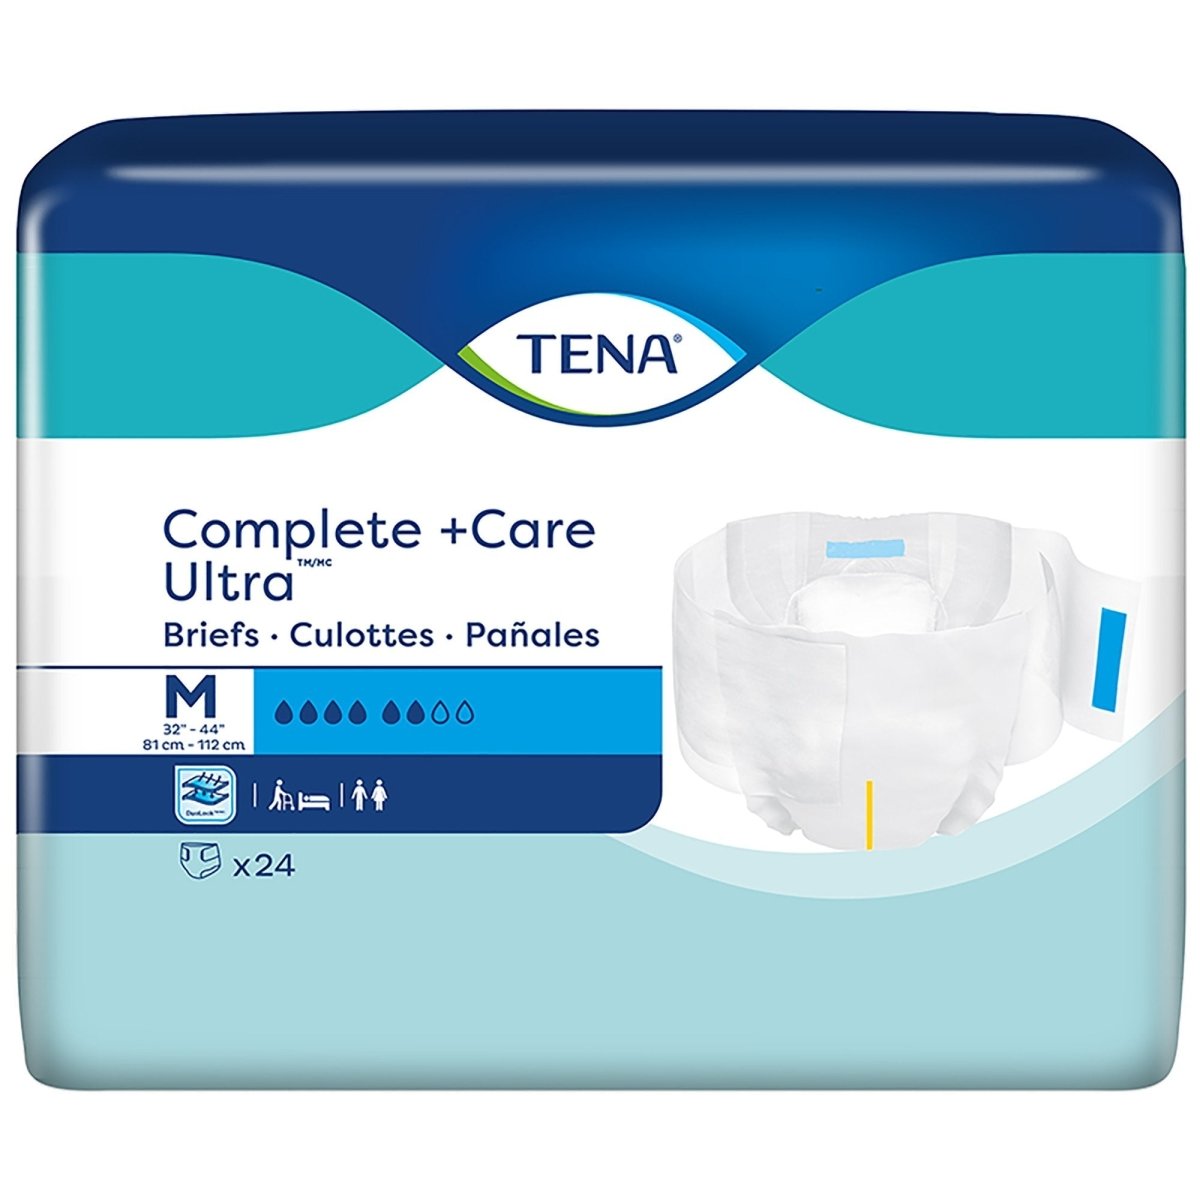 Tena Complete +Care Ultra Incontinence Brief -Unisex - 1160263_BG - 1